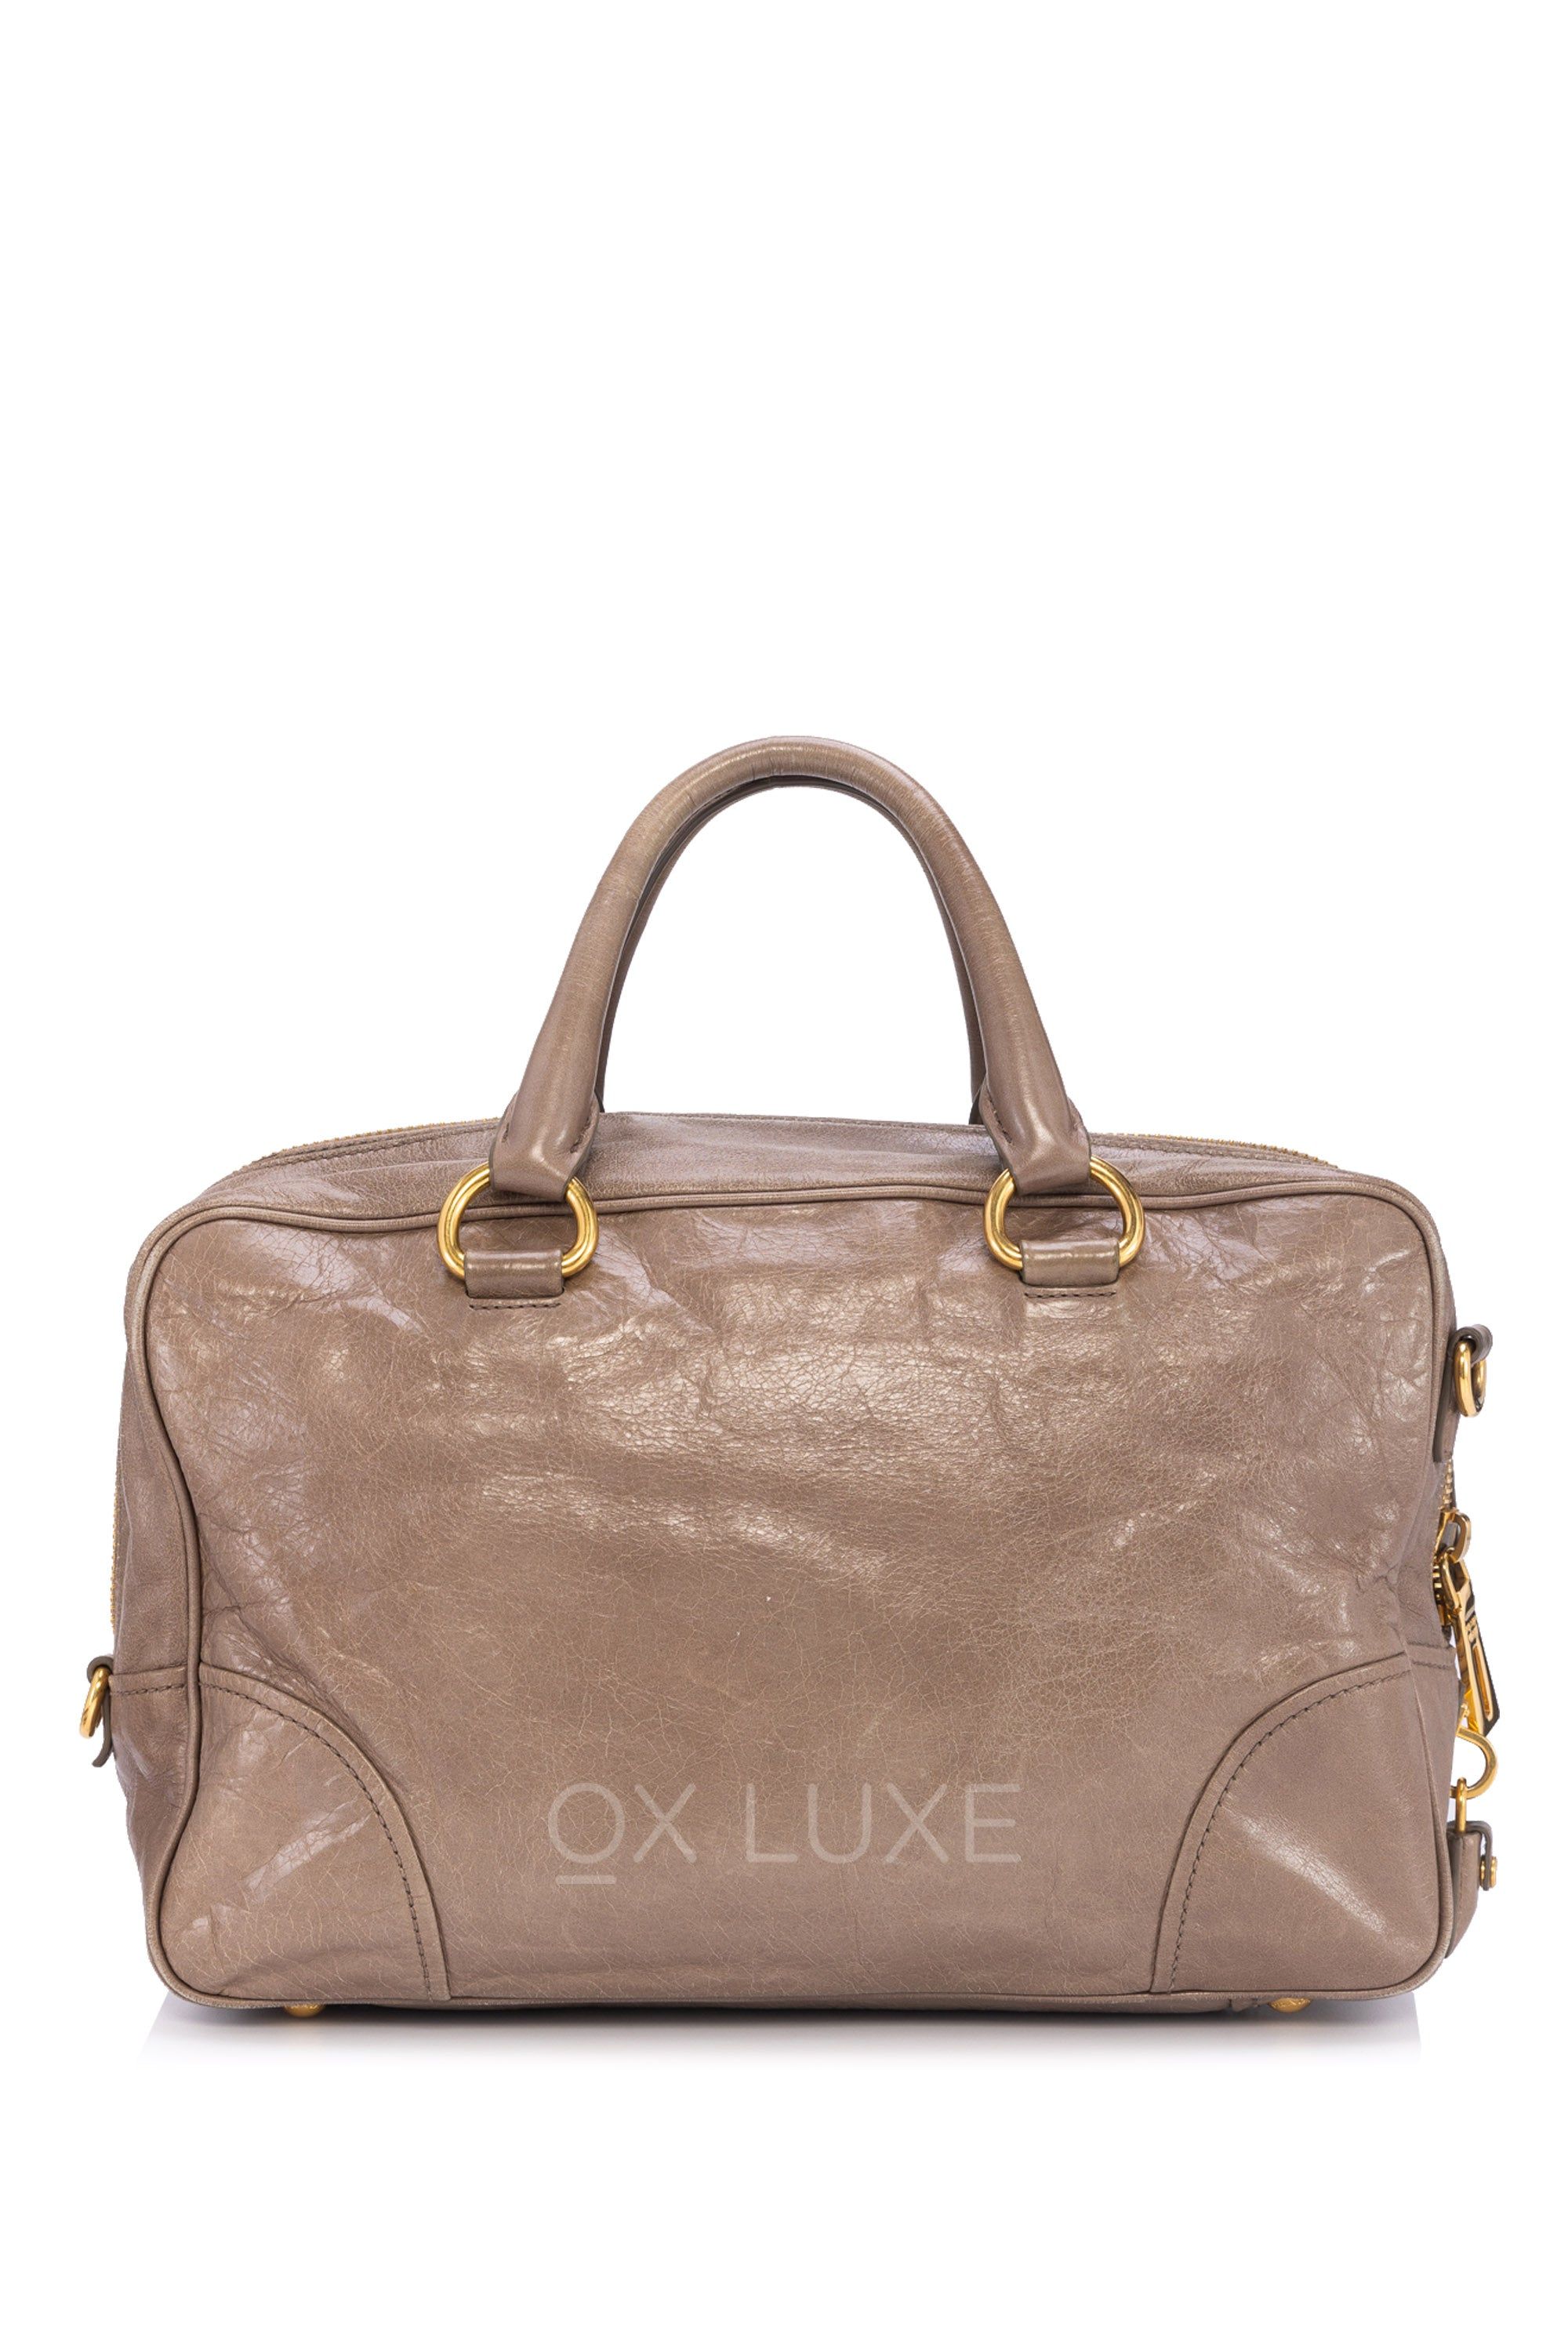 Prada Pre-Owned Lux Bauletto Handbag - Farfetch